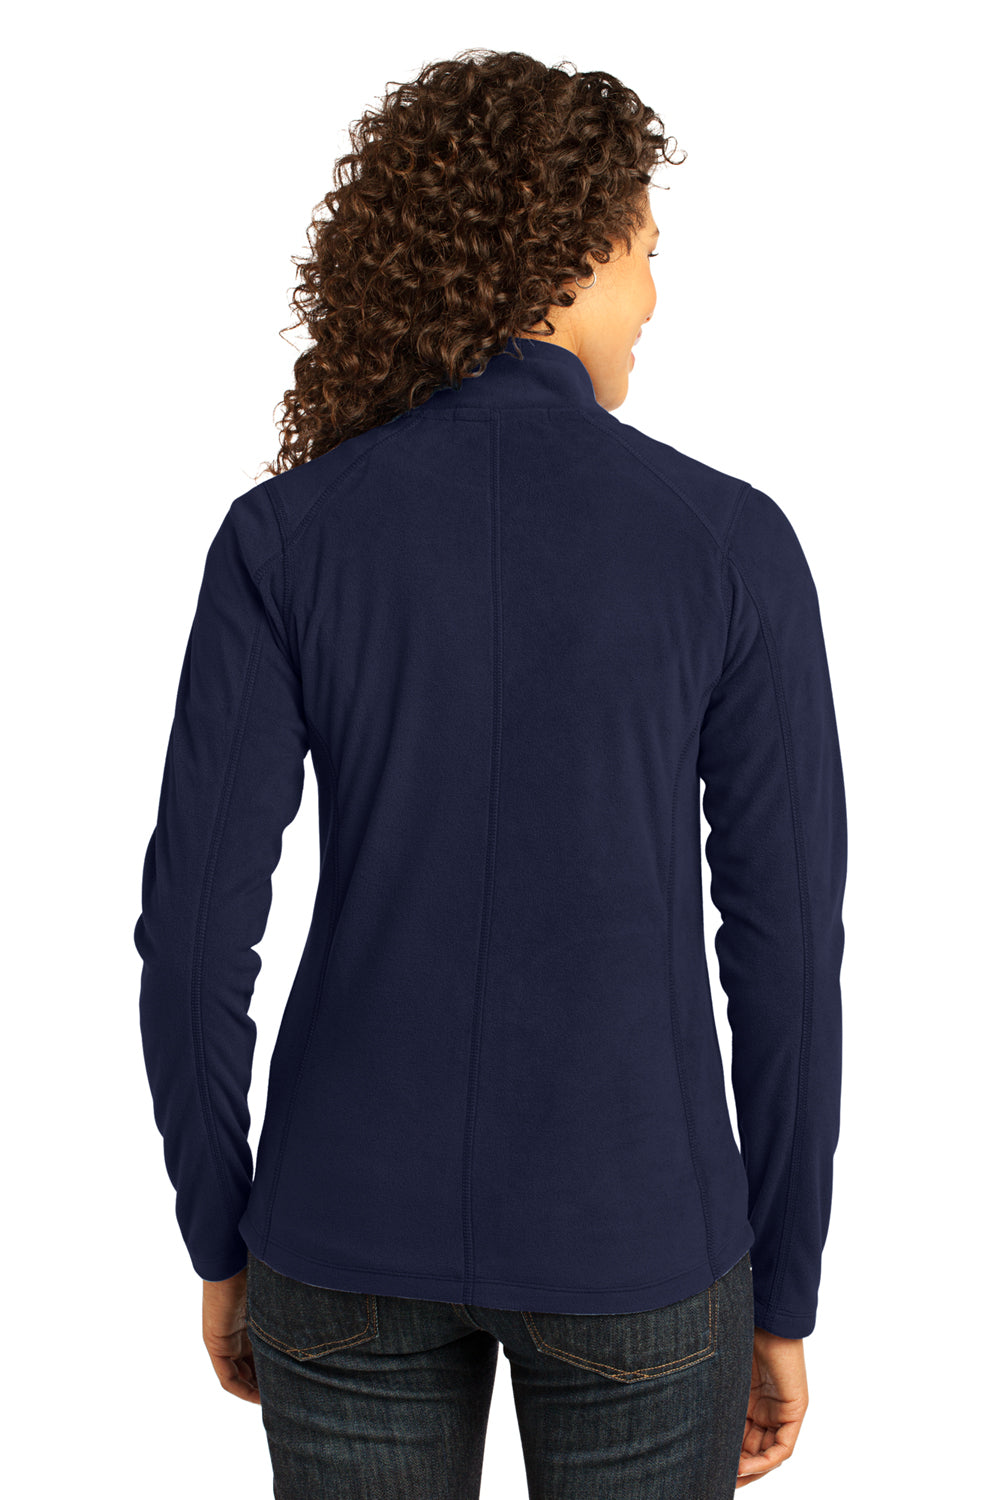 Port Authority L223 Womens Full Zip Microfleece Jacket Navy Blue Back